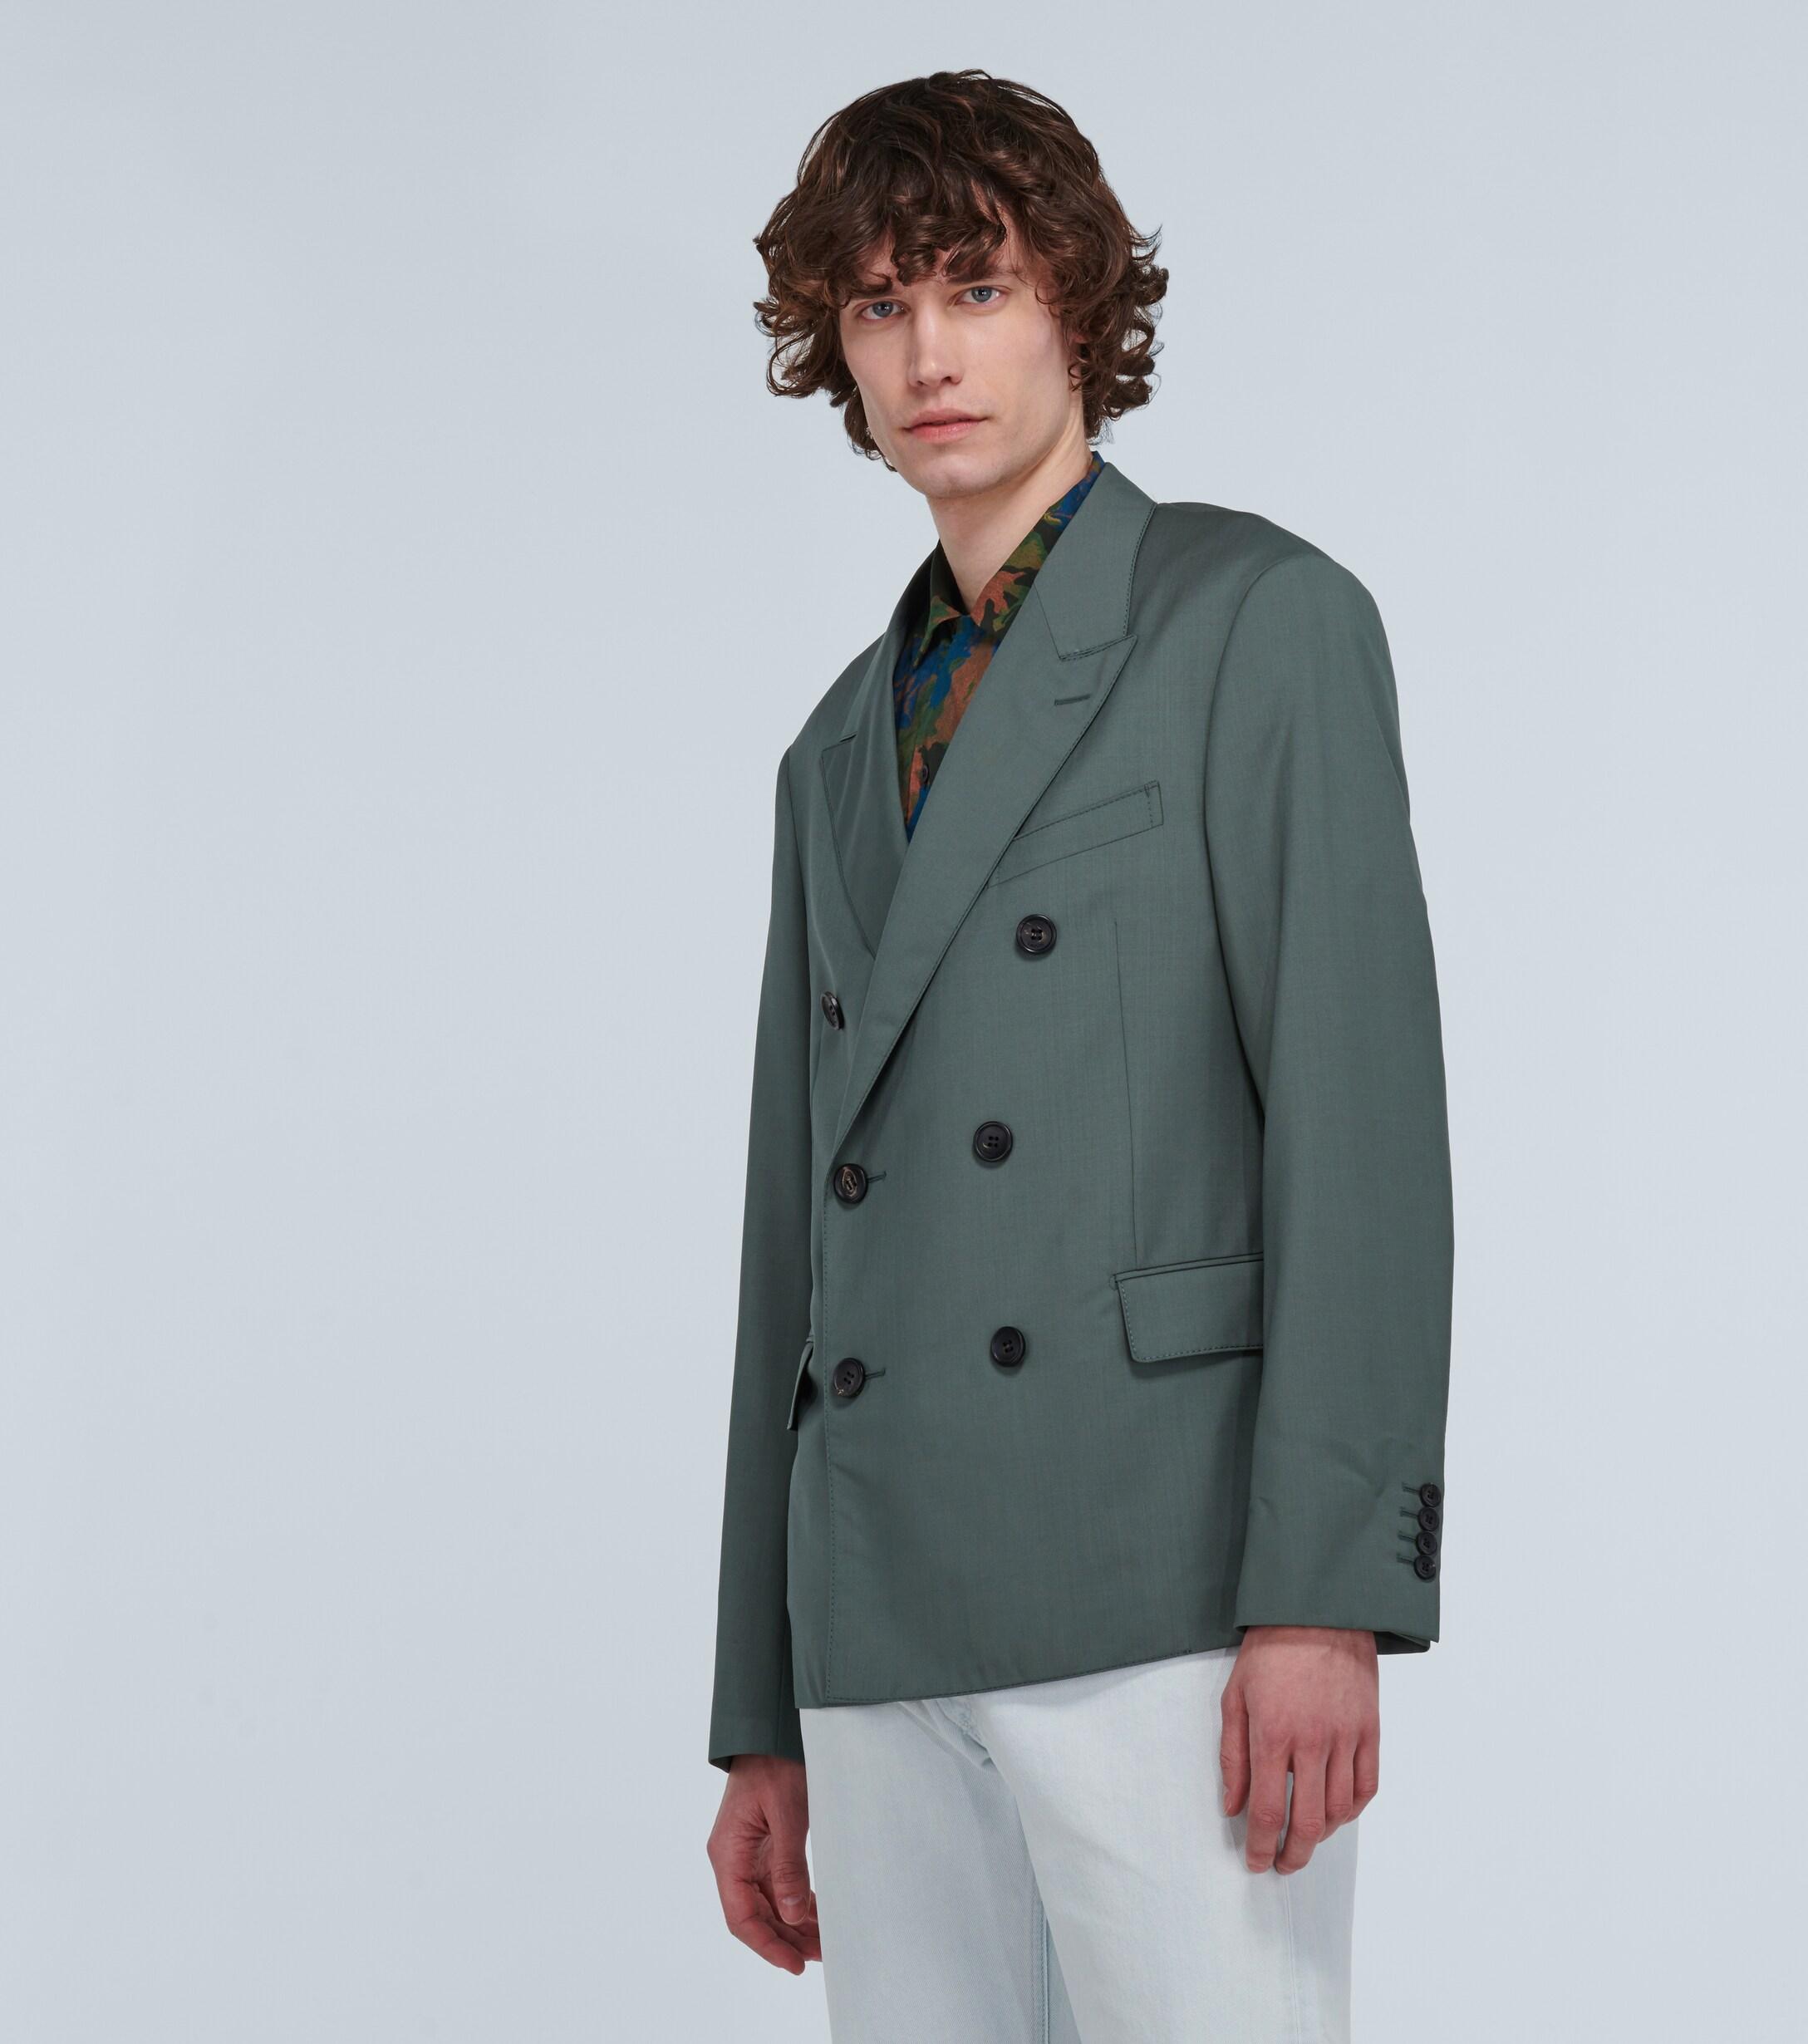 Lanvin Double-breasted Wool-blend Blazer in Green for Men - Lyst